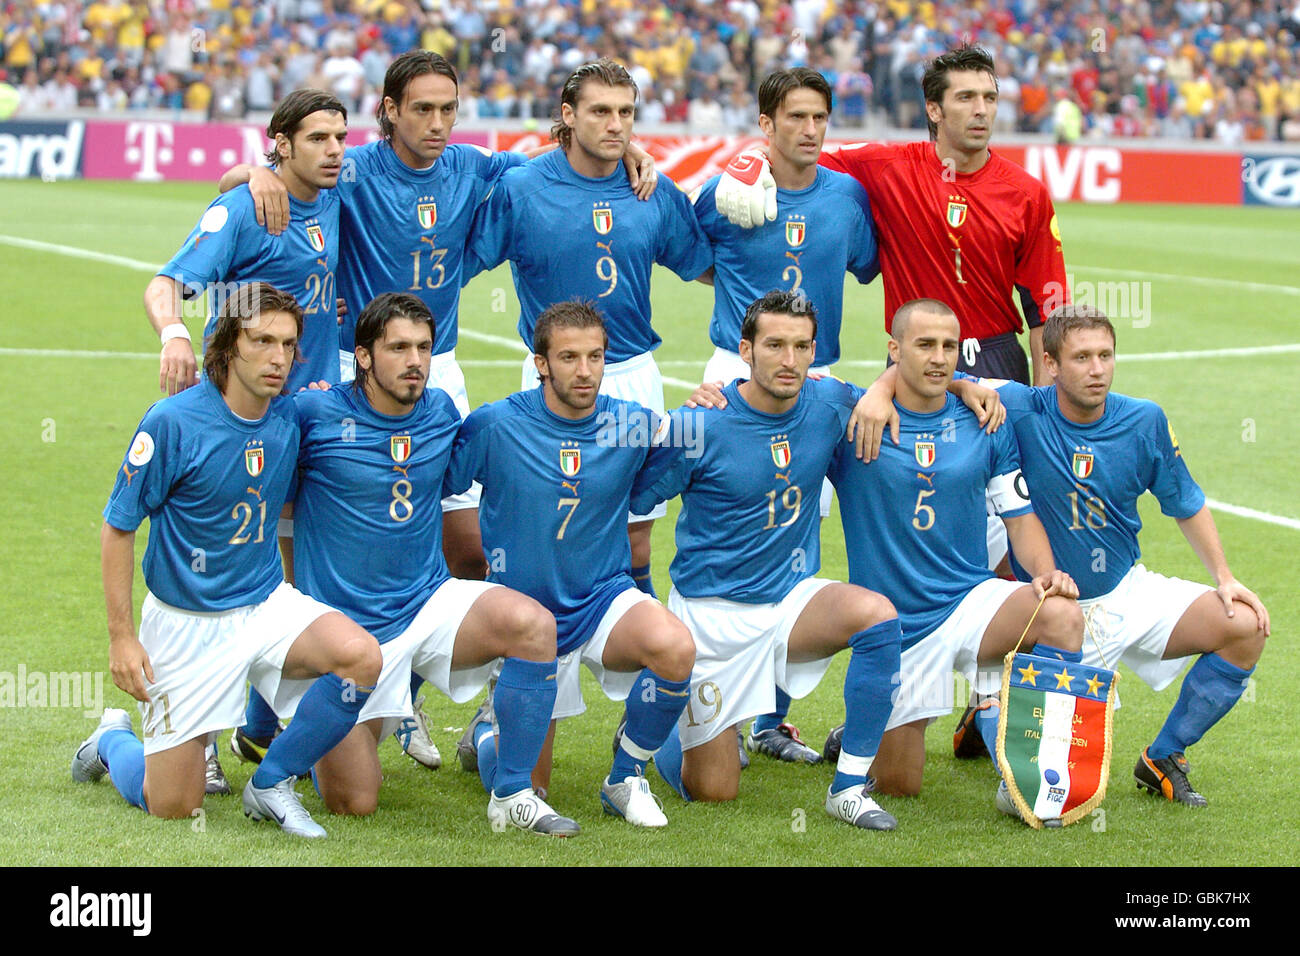 Fußball - Europameisterschaft 2004 - Gruppe C - Italien / Schweden  Stockfotografie - Alamy